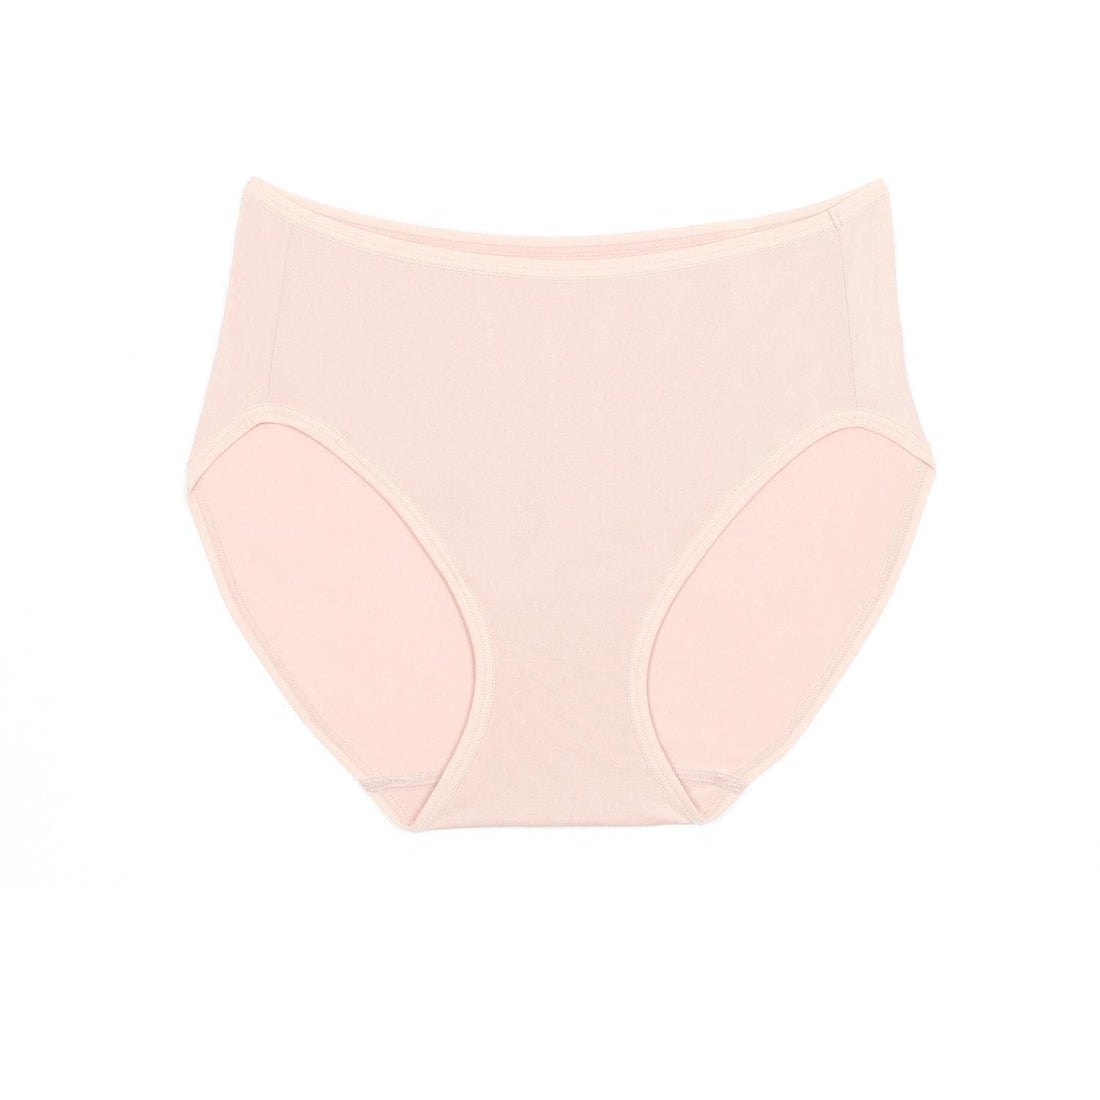 Wacoal High Waist Panty Wacoal high-waisted belly-fitting panties, model  WU4888, set of 3 pieces, ovaltine color (OT).